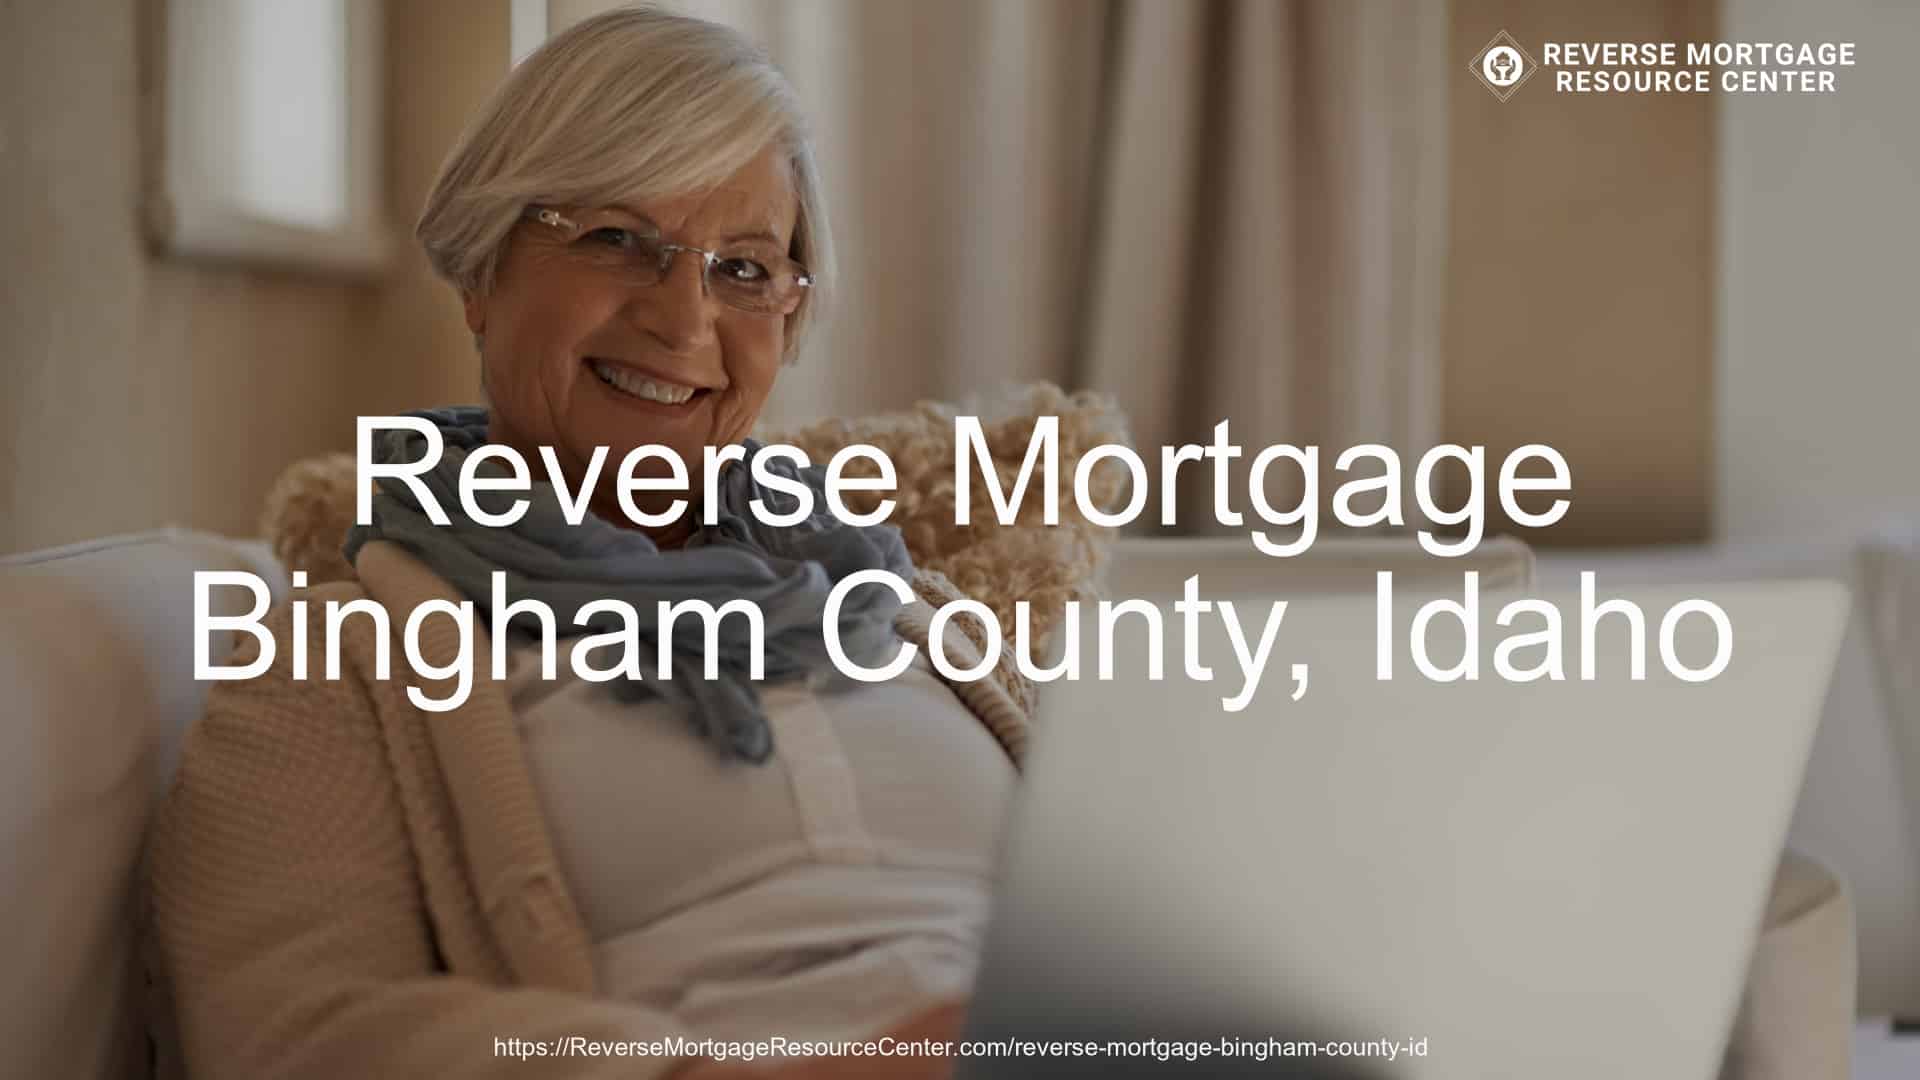 Reverse Mortgage Loans in Bingham County Idaho